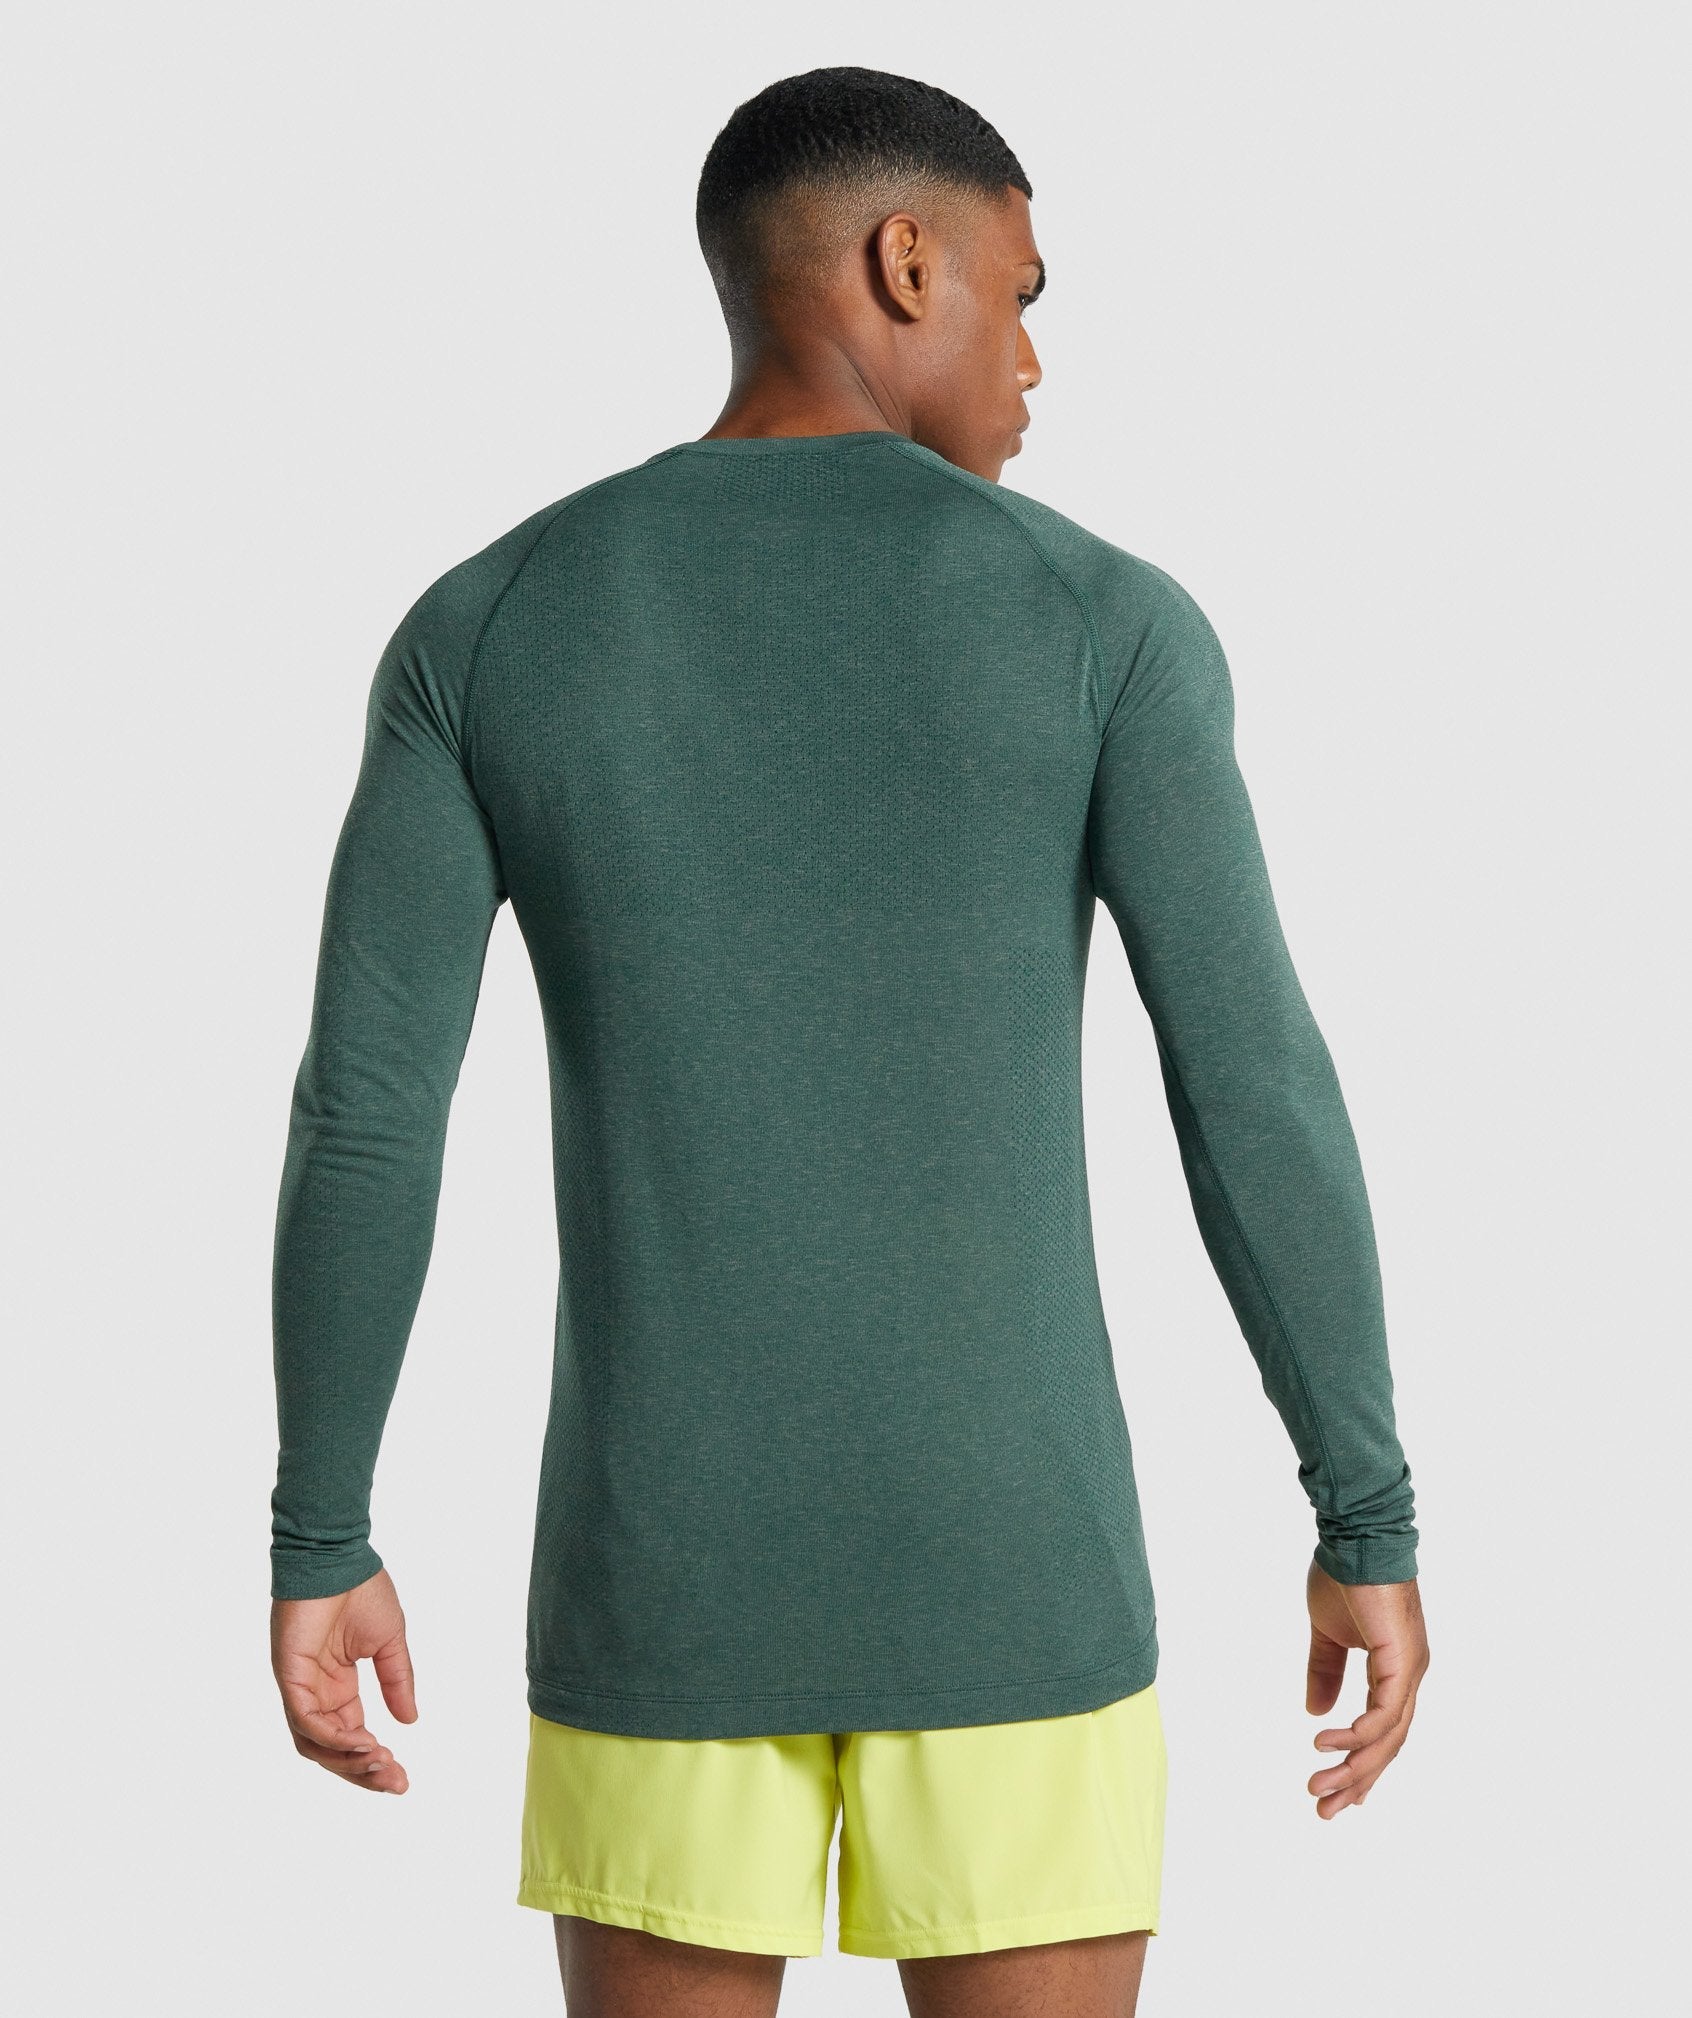 Vital Light  Seamless Long Sleeve T-Shirt in Dark Green Marl - view 2